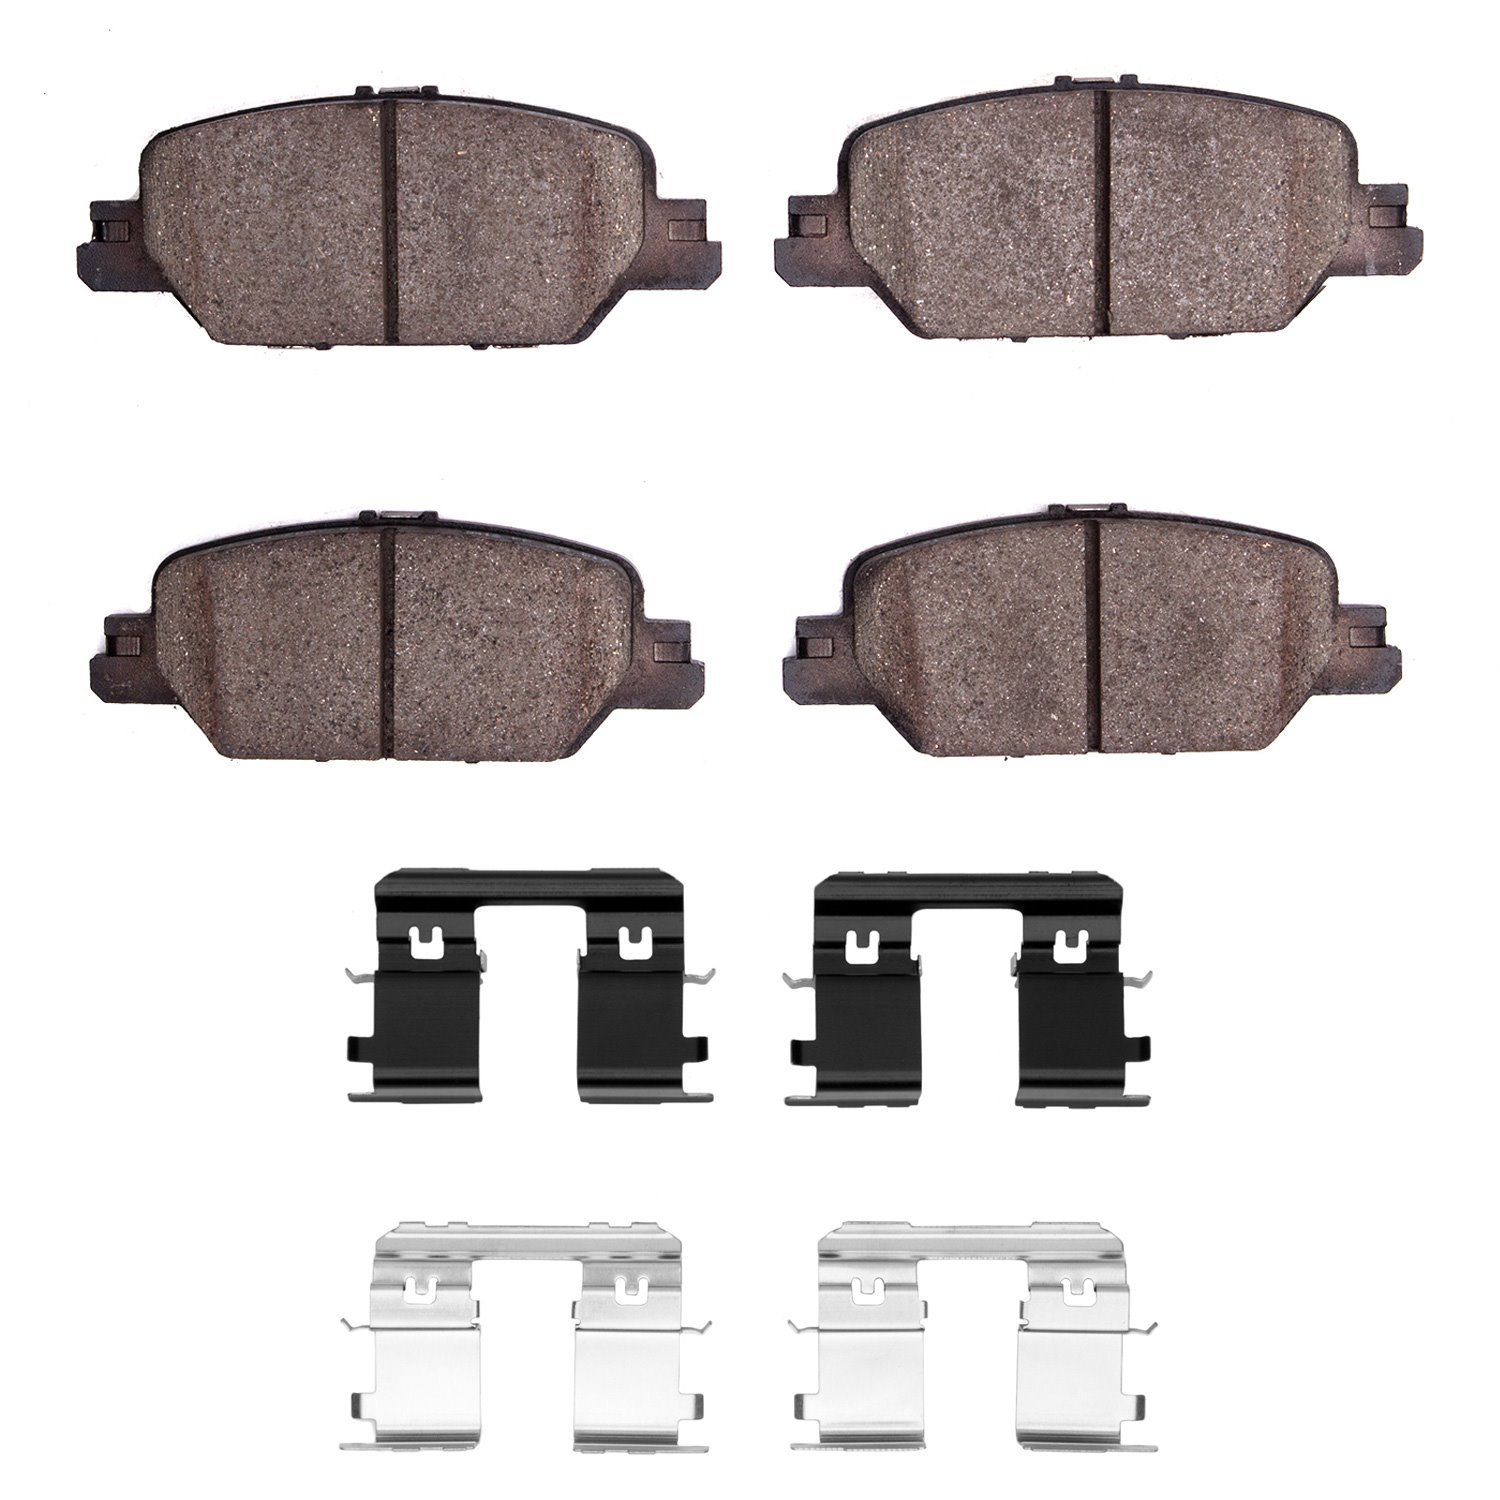 1551-2037-01 5000 Advanced Ceramic Brake Pads & Hardware Kit, Fits Select Acura/Honda, Position: Rear